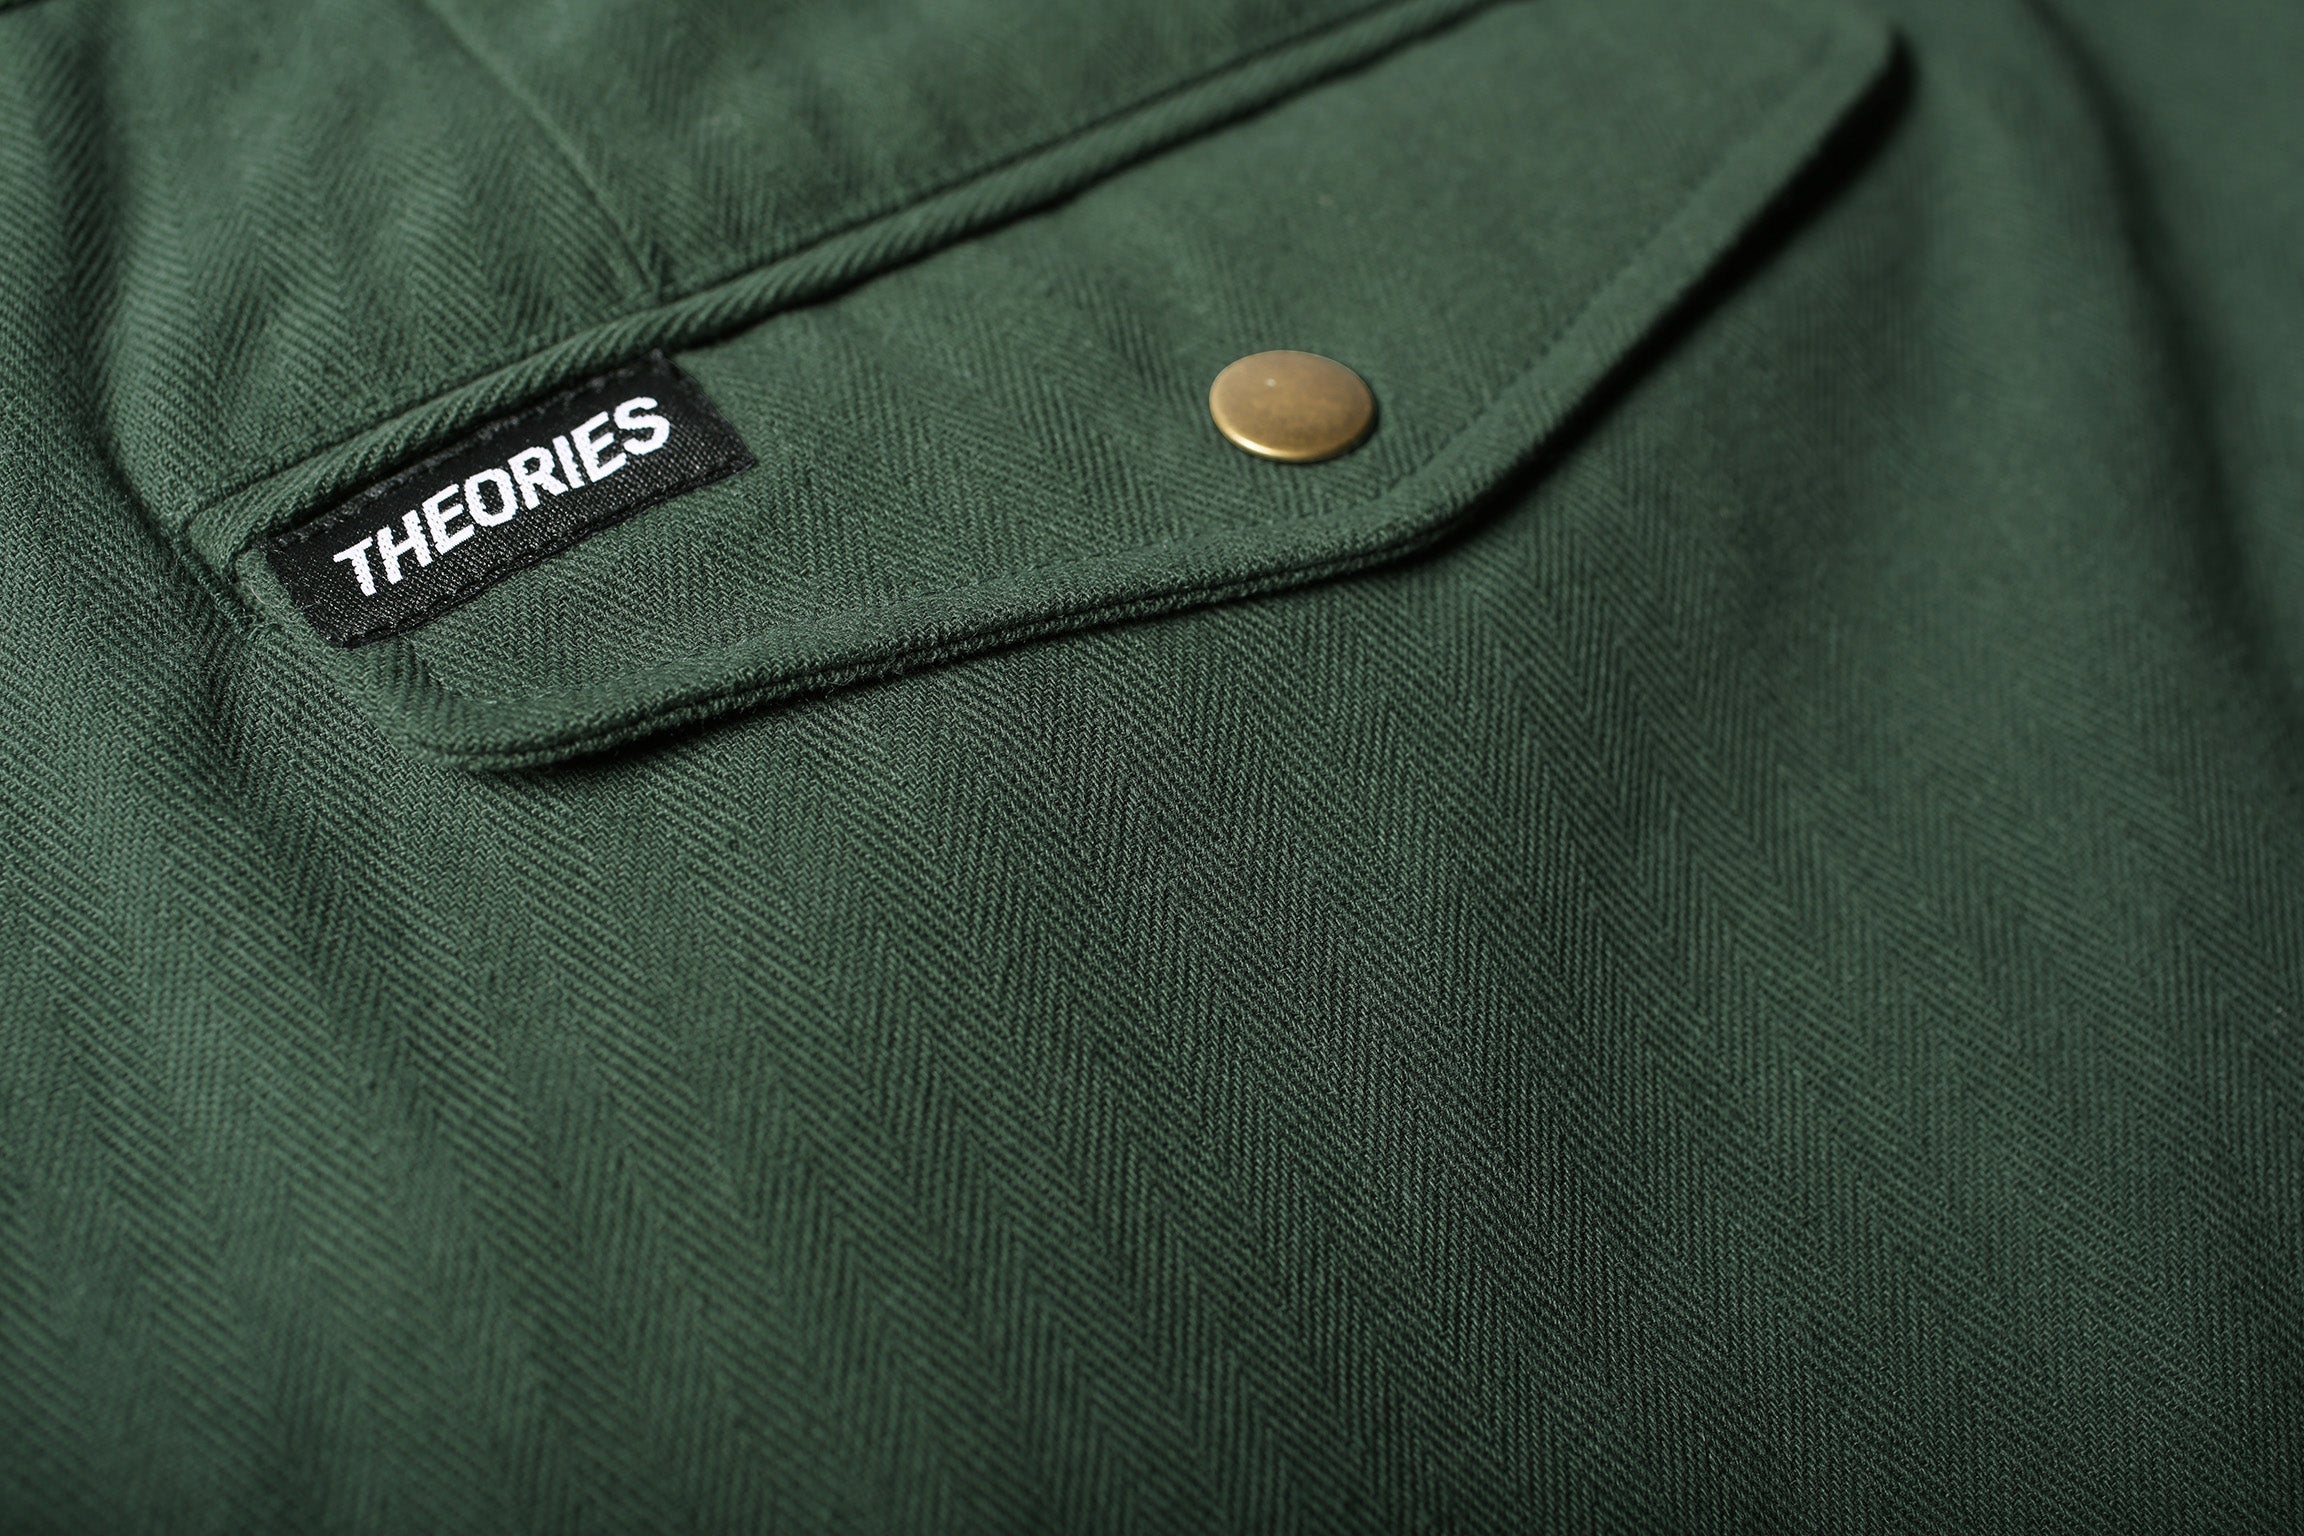 Theories Herringbone Hunting Jacket Dark Green